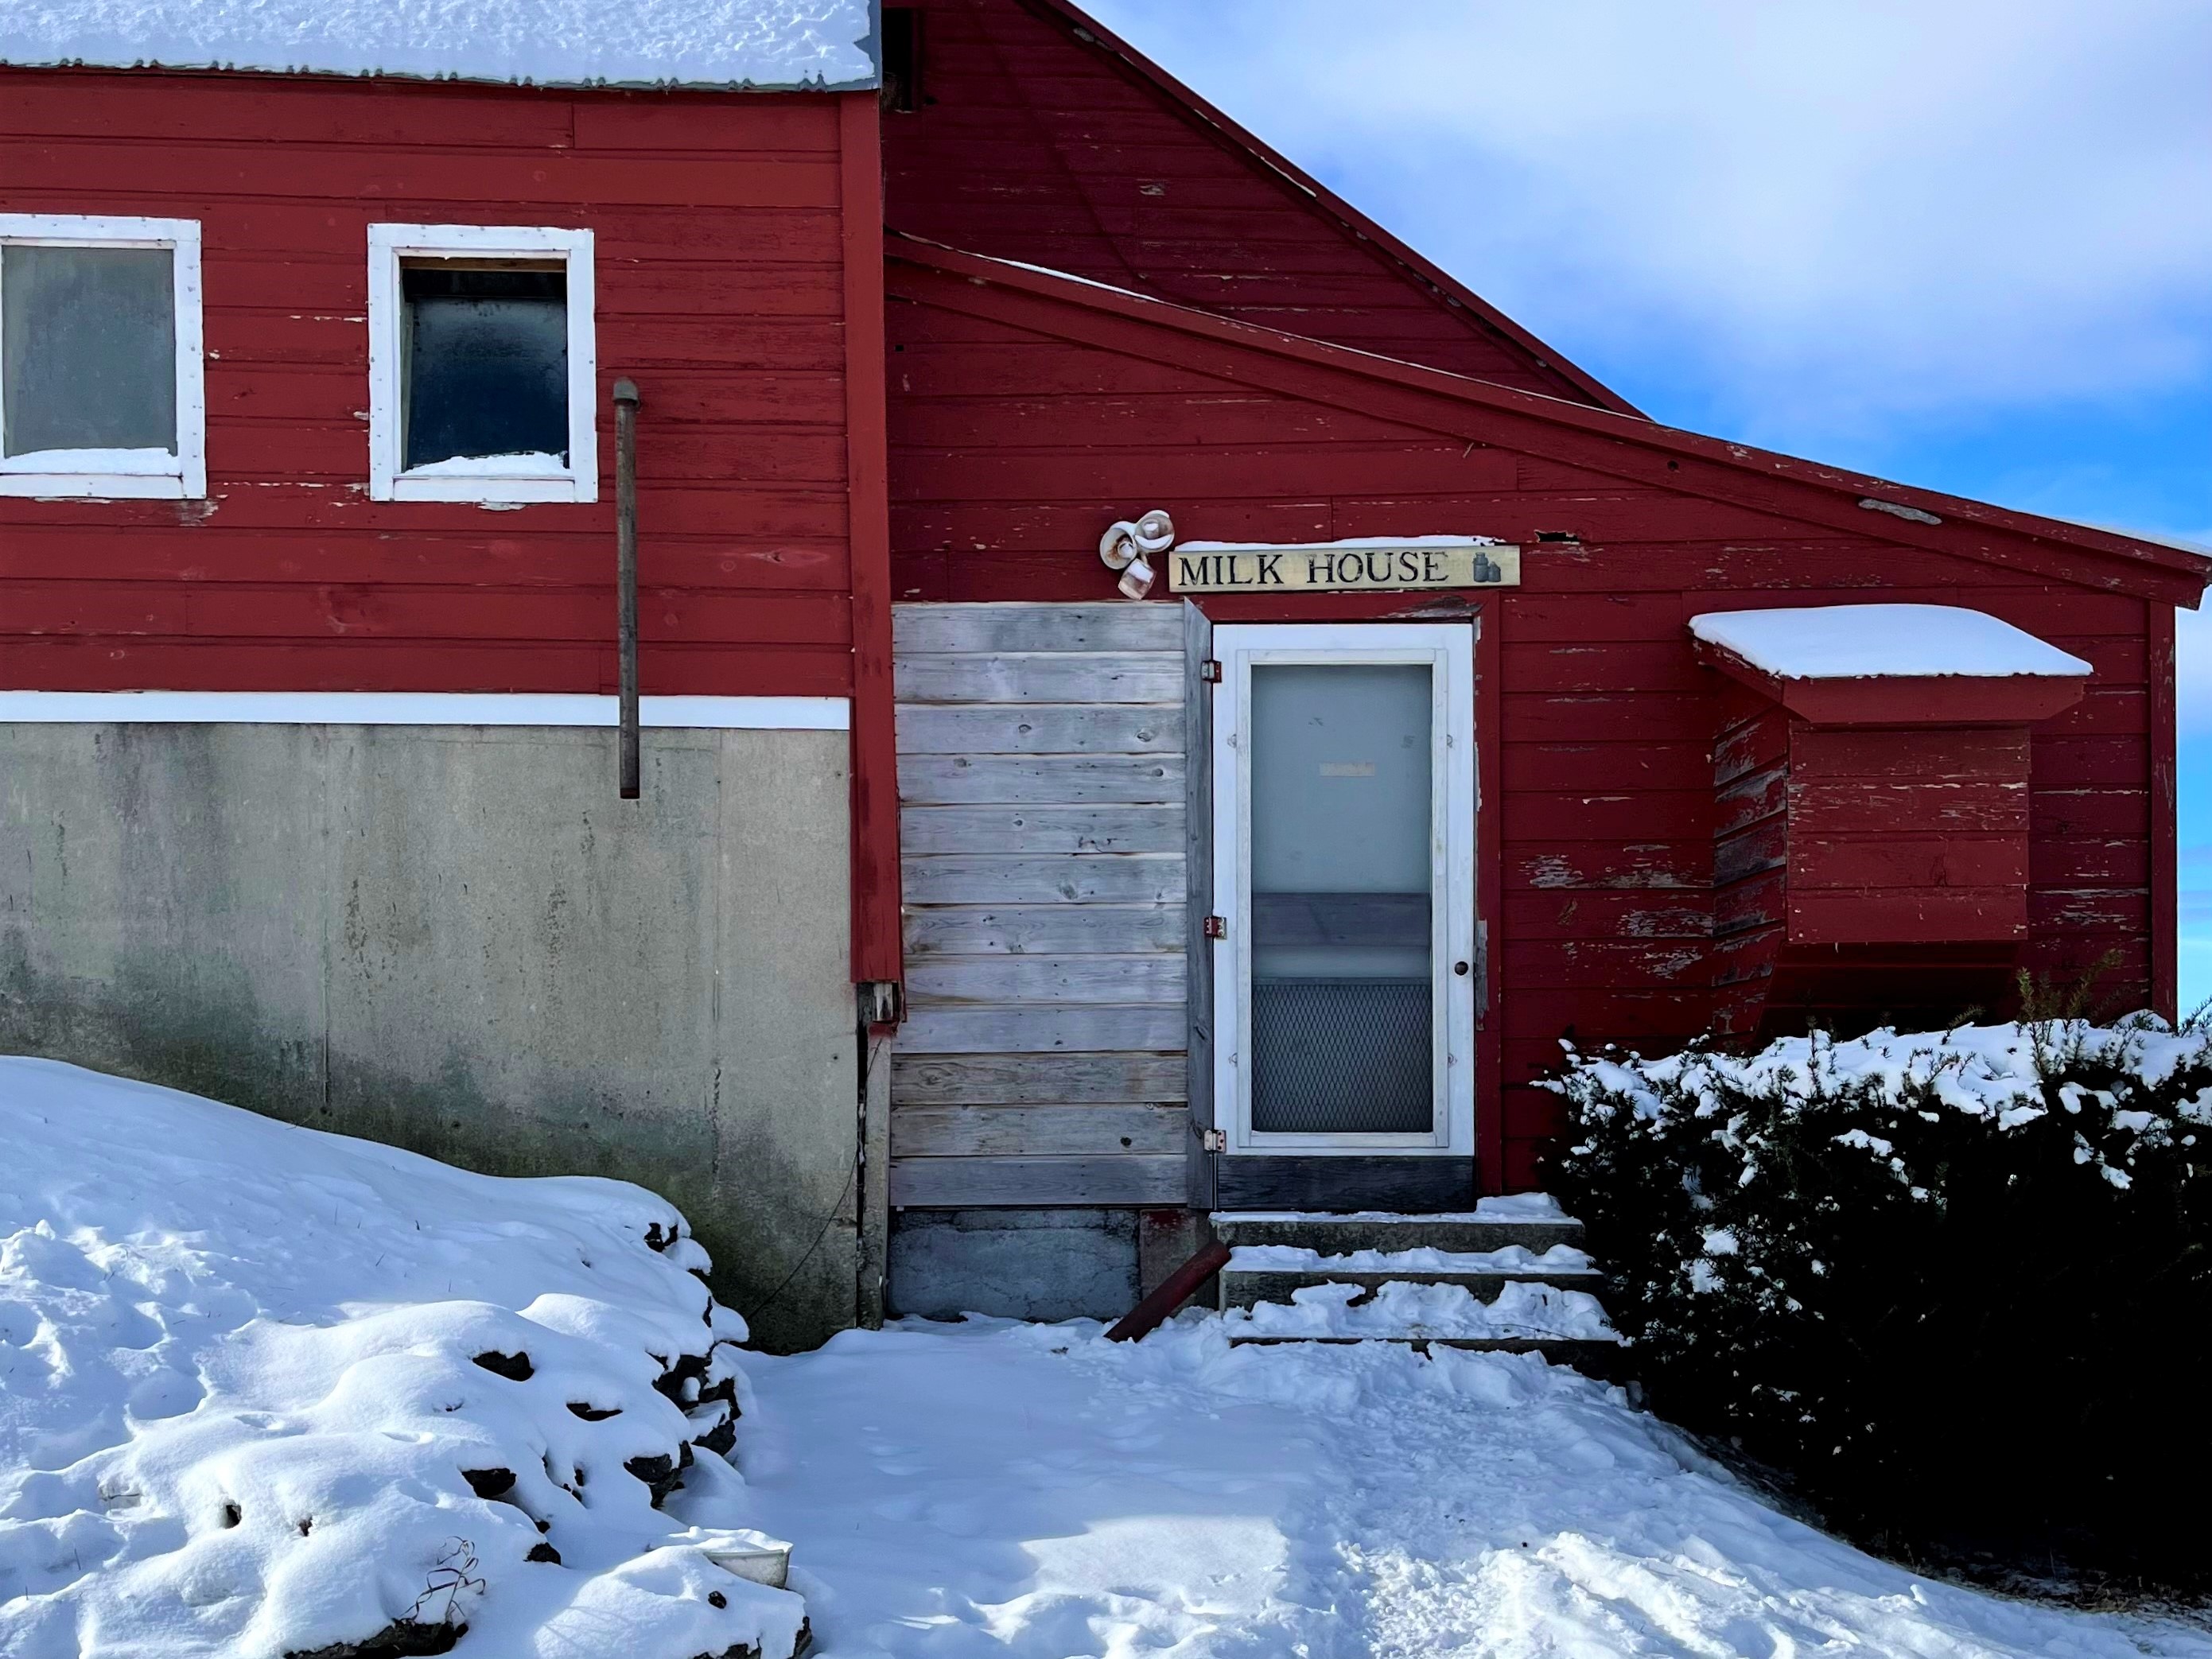 Milk House in winter